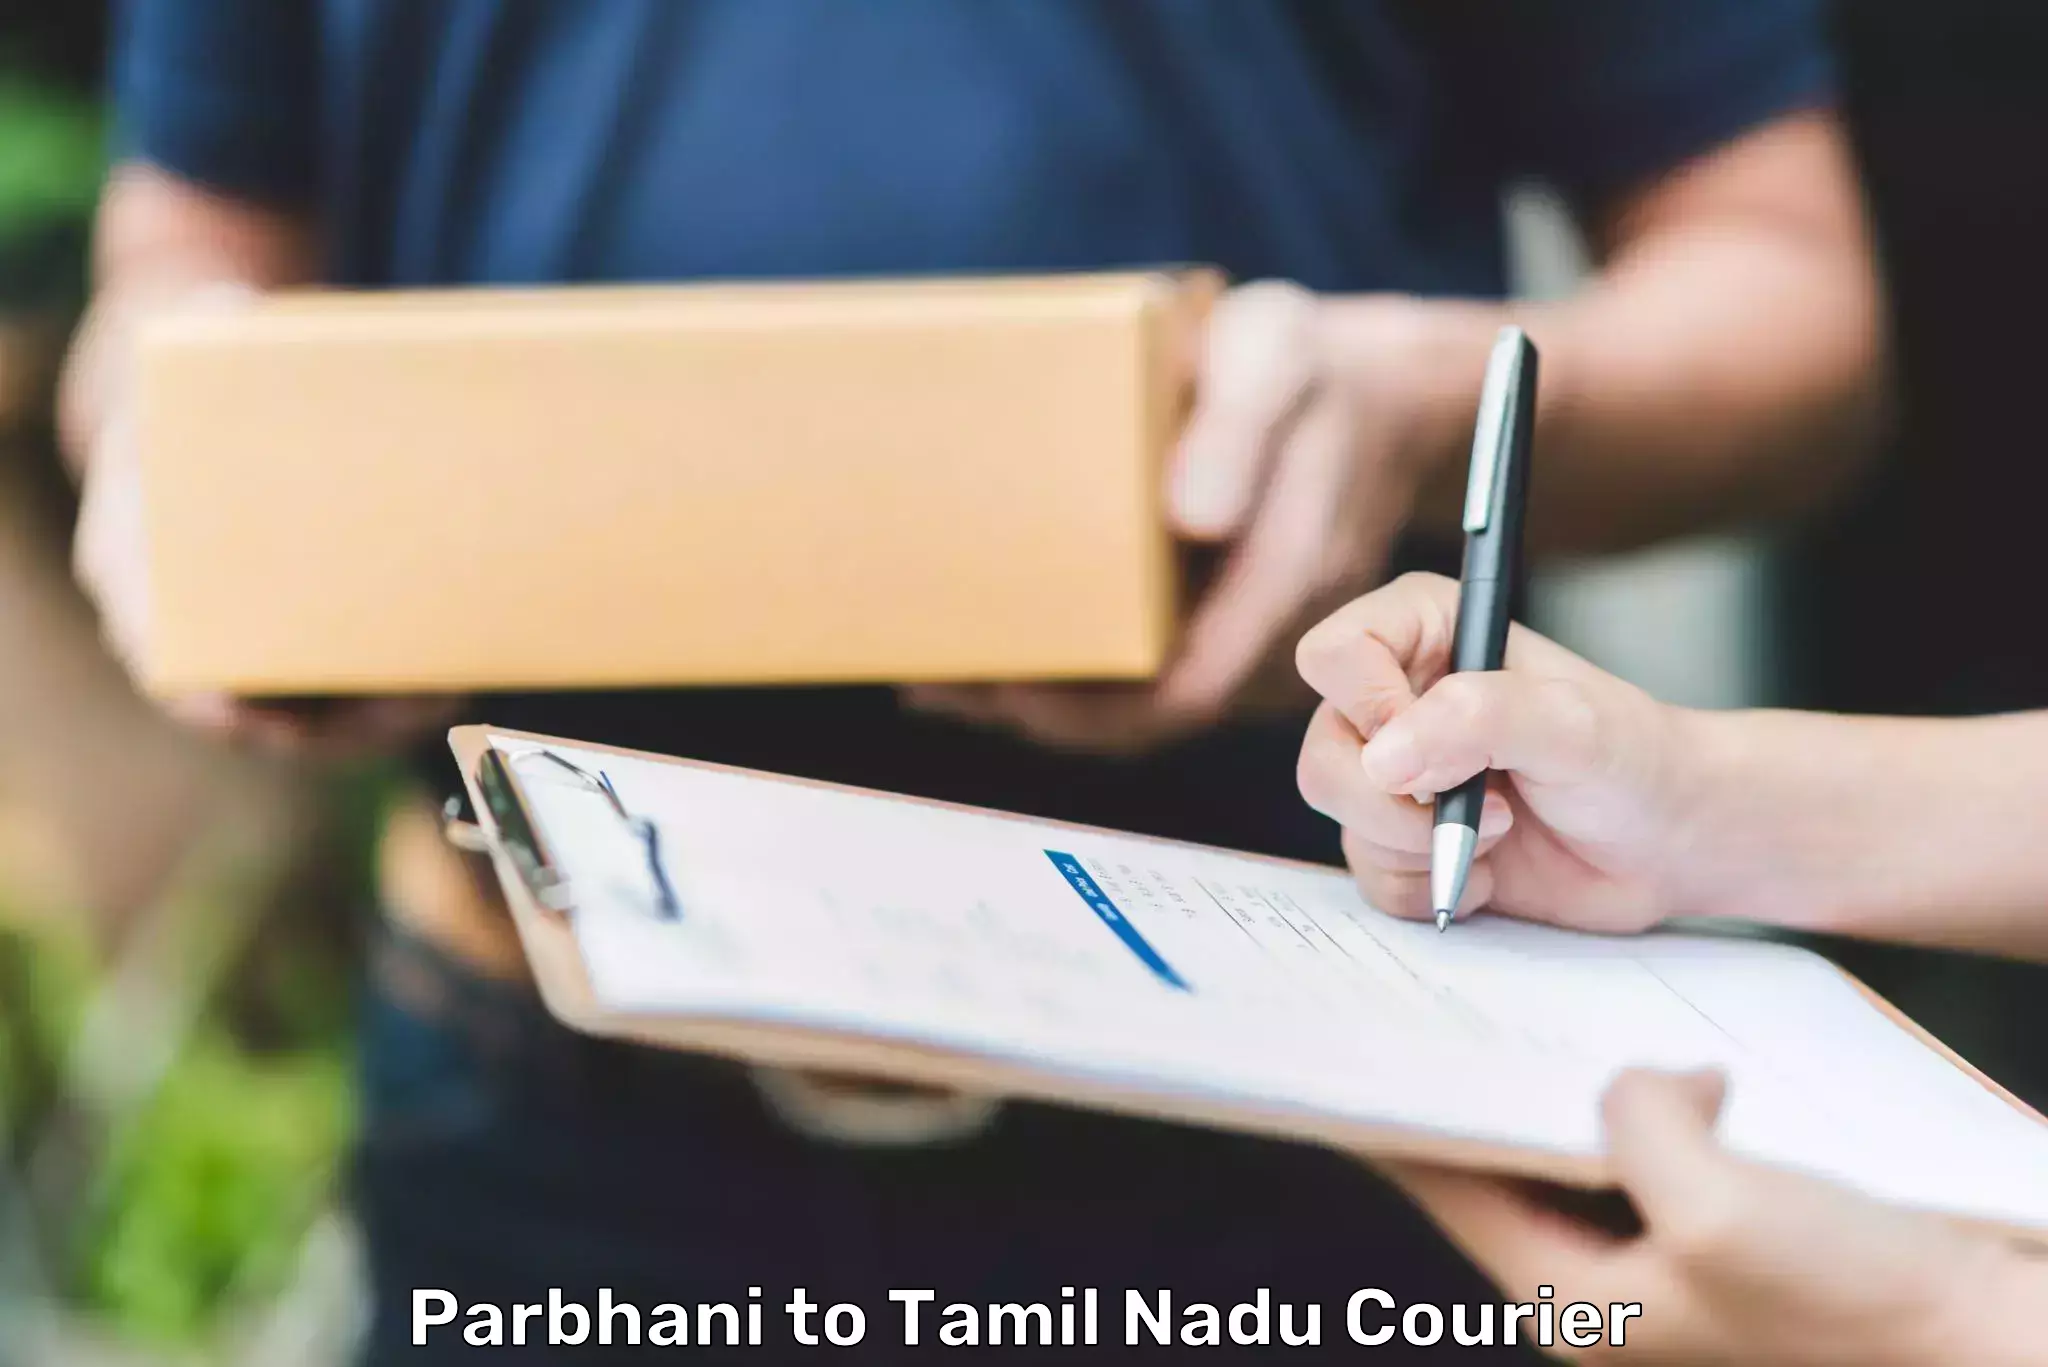 Smart shipping technology Parbhani to Tamil Nadu